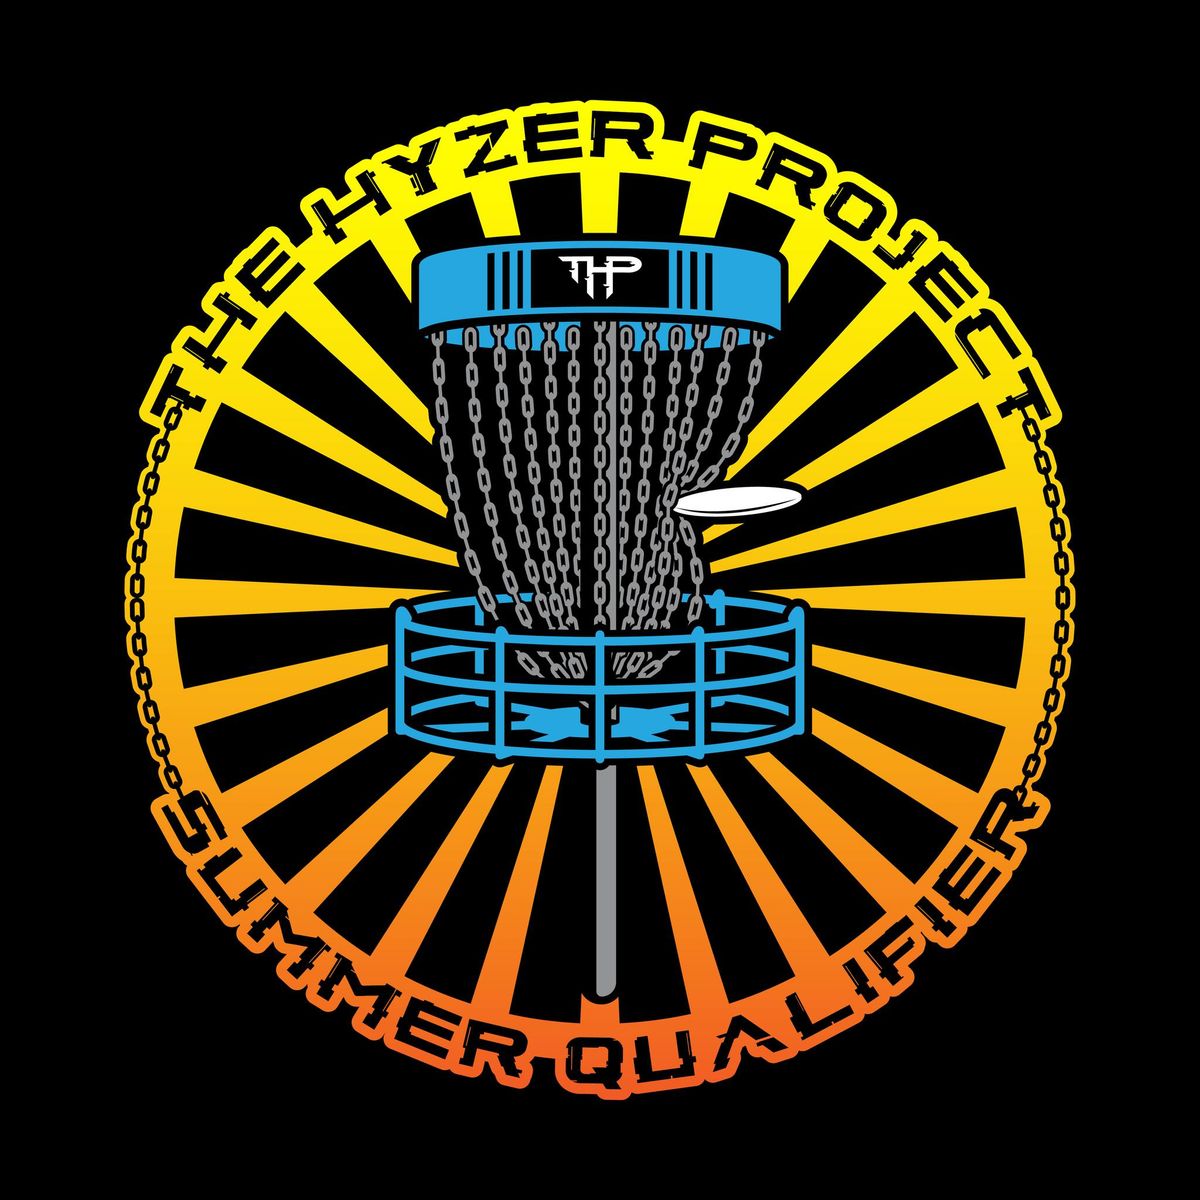 The Hyzer Project Summer Qualifier